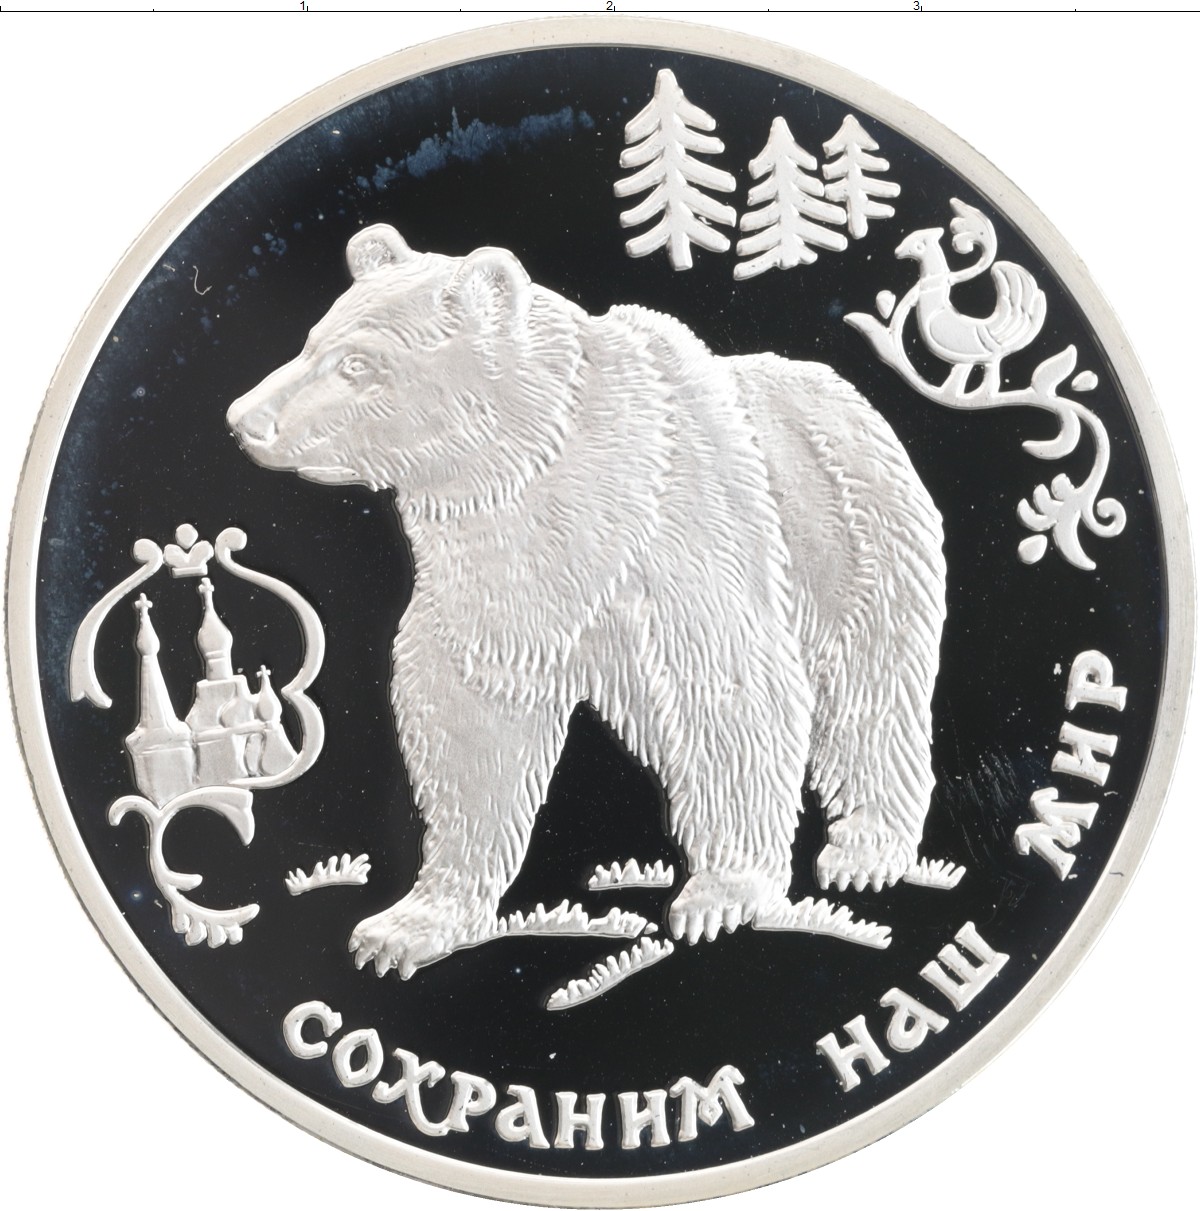 Монета сохраним наш мир. Серебряная монета бурый медведь сохраним наш мир. Монета 3 рубля серебро медведь. Сохраним наш мир монеты. Серебряные монеты России 3 рубля серебро.